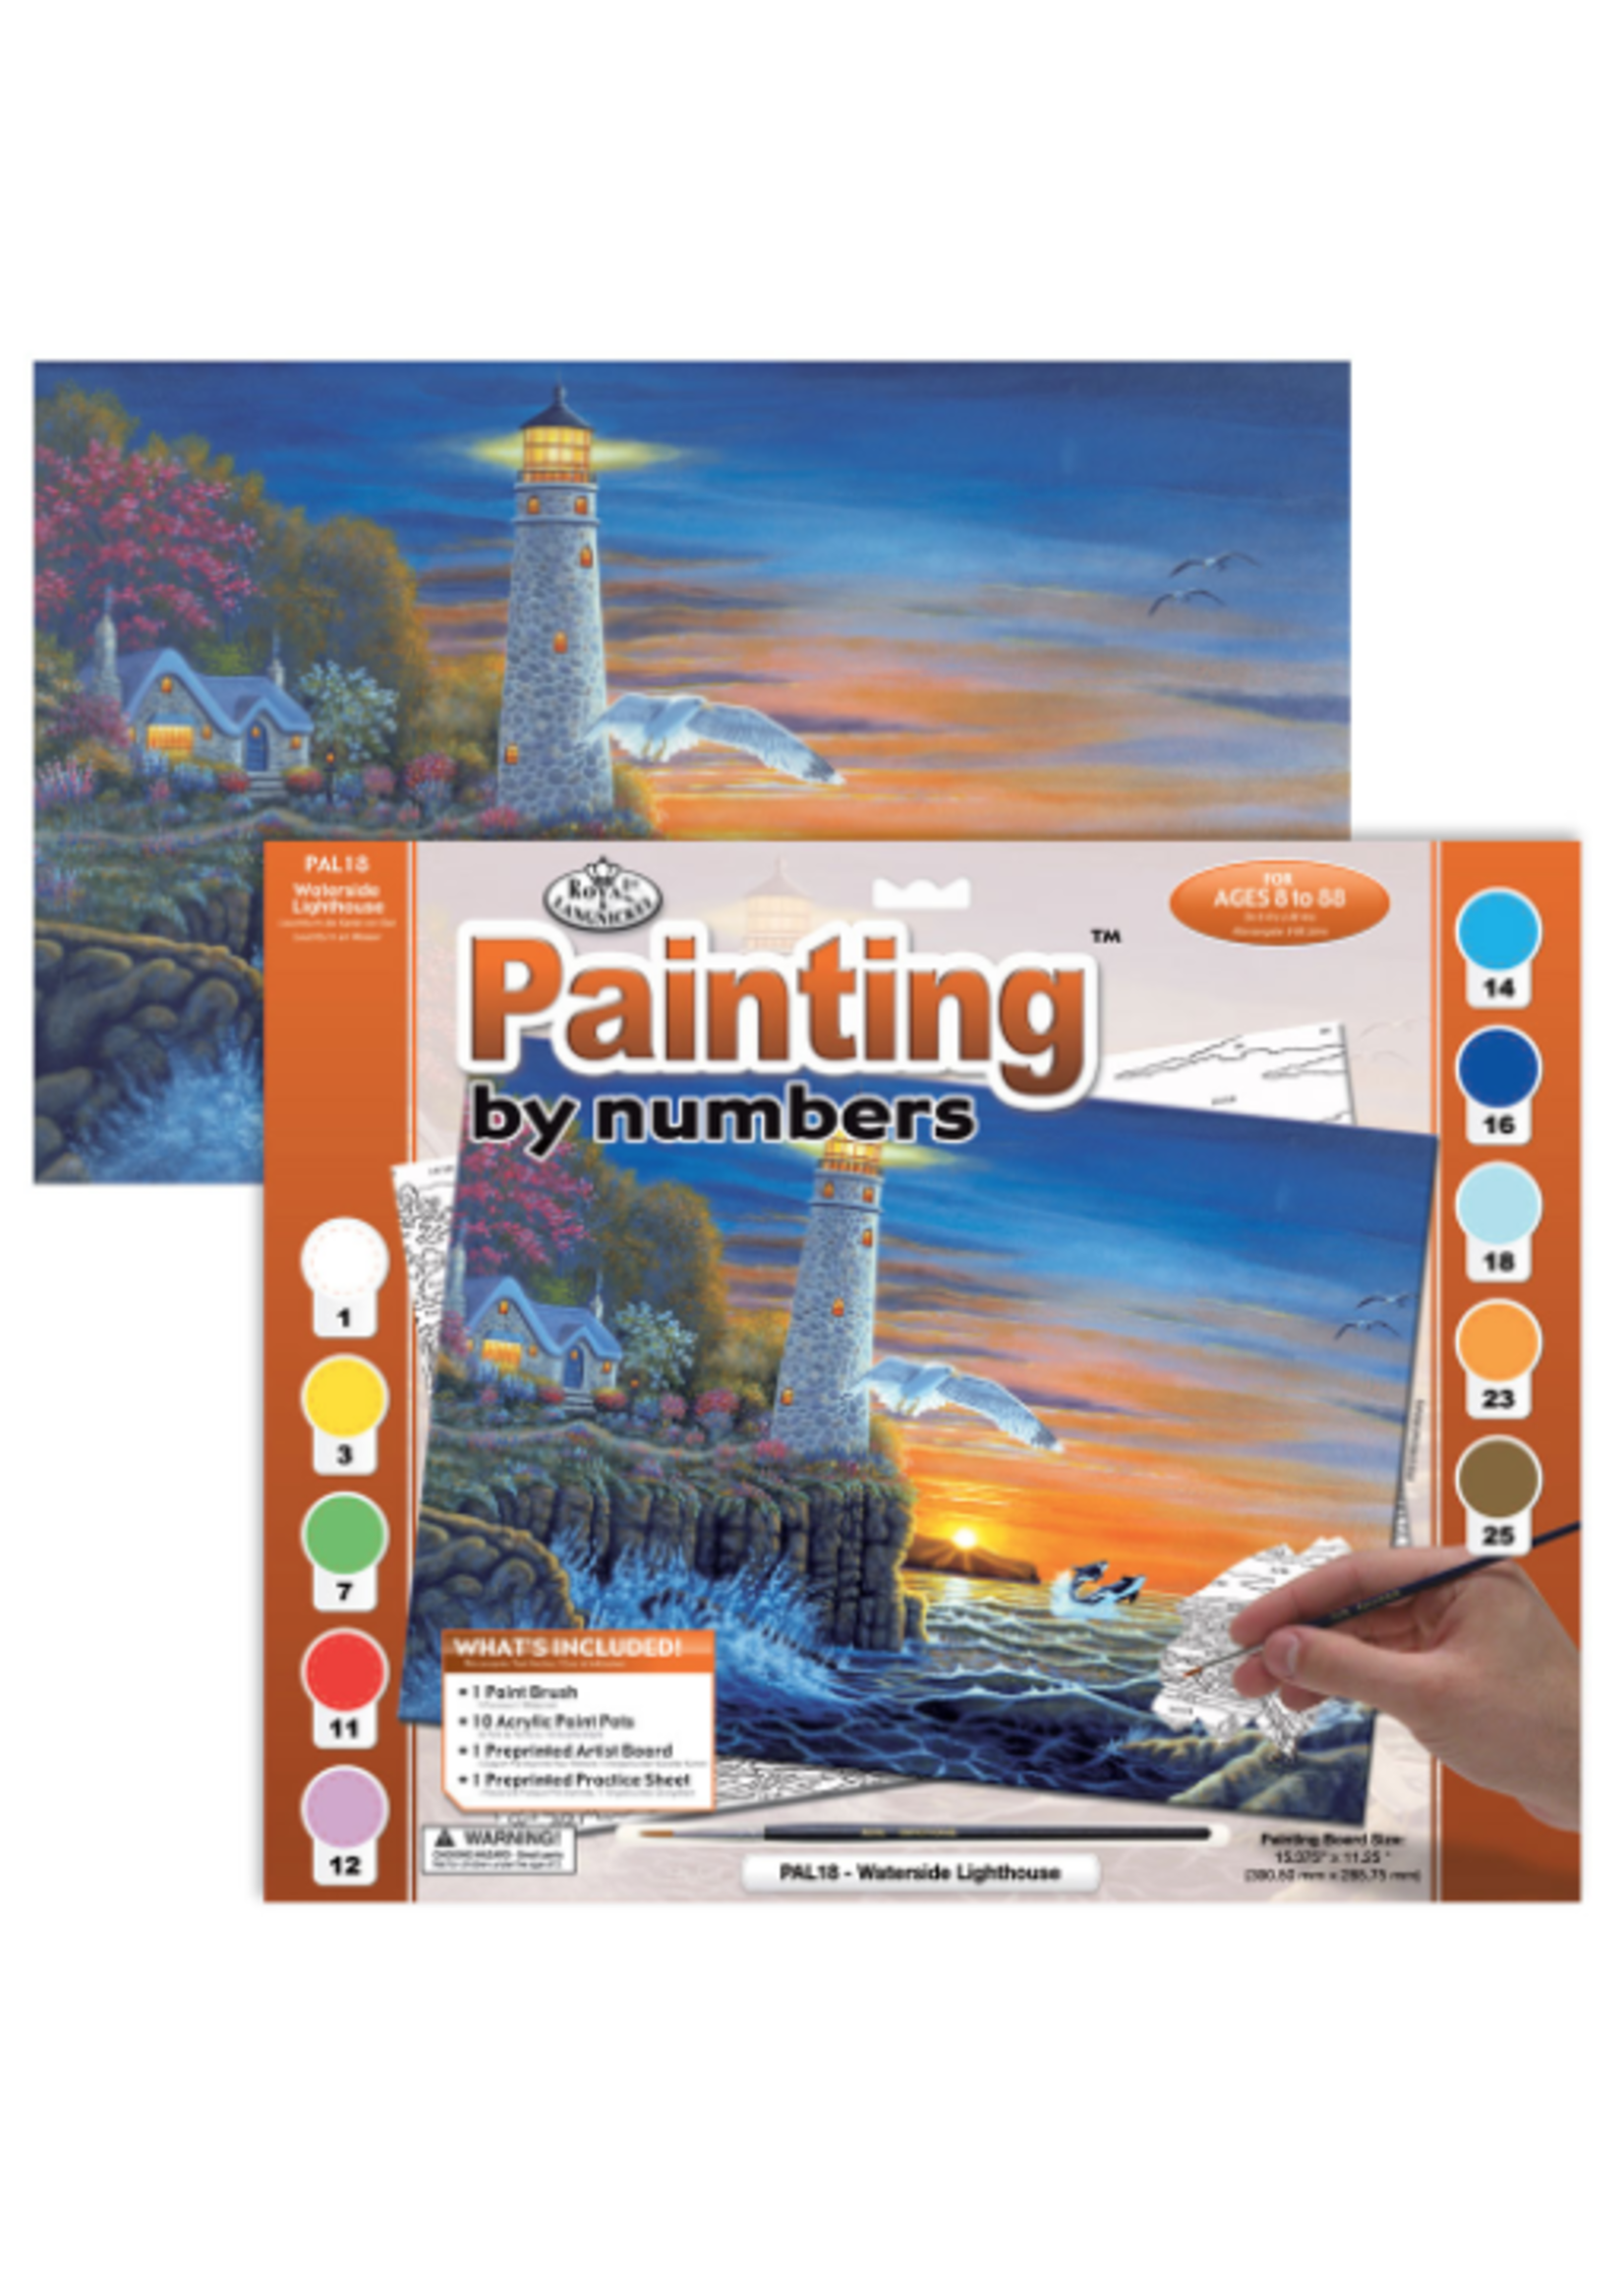 royal & langnickel Paint # - Waterside lighthouse